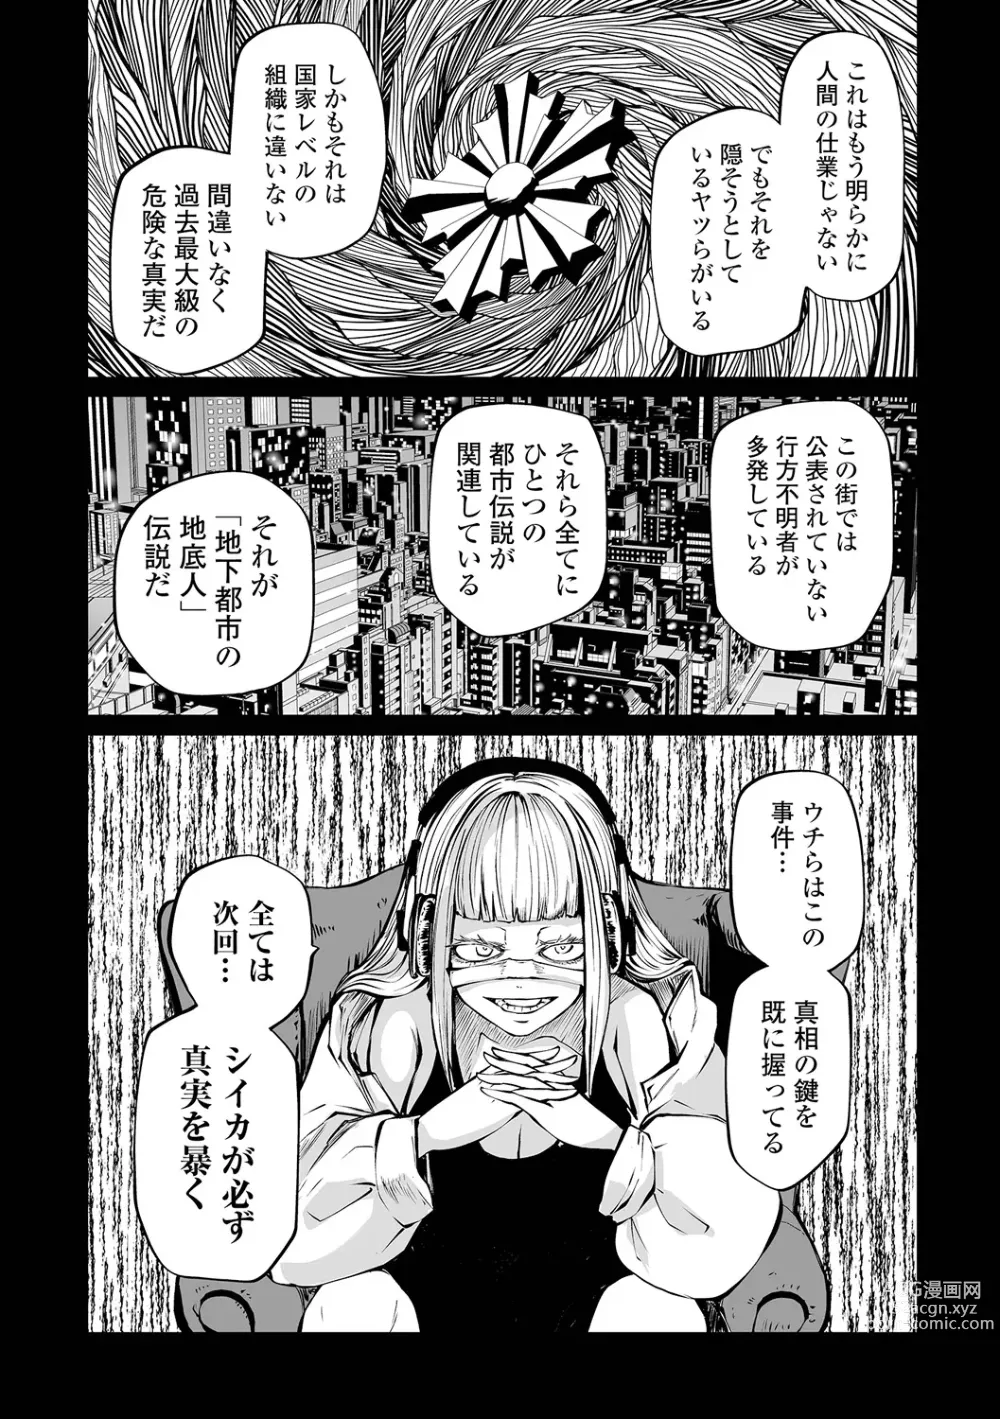 Page 106 of manga Ryona King Vol.28